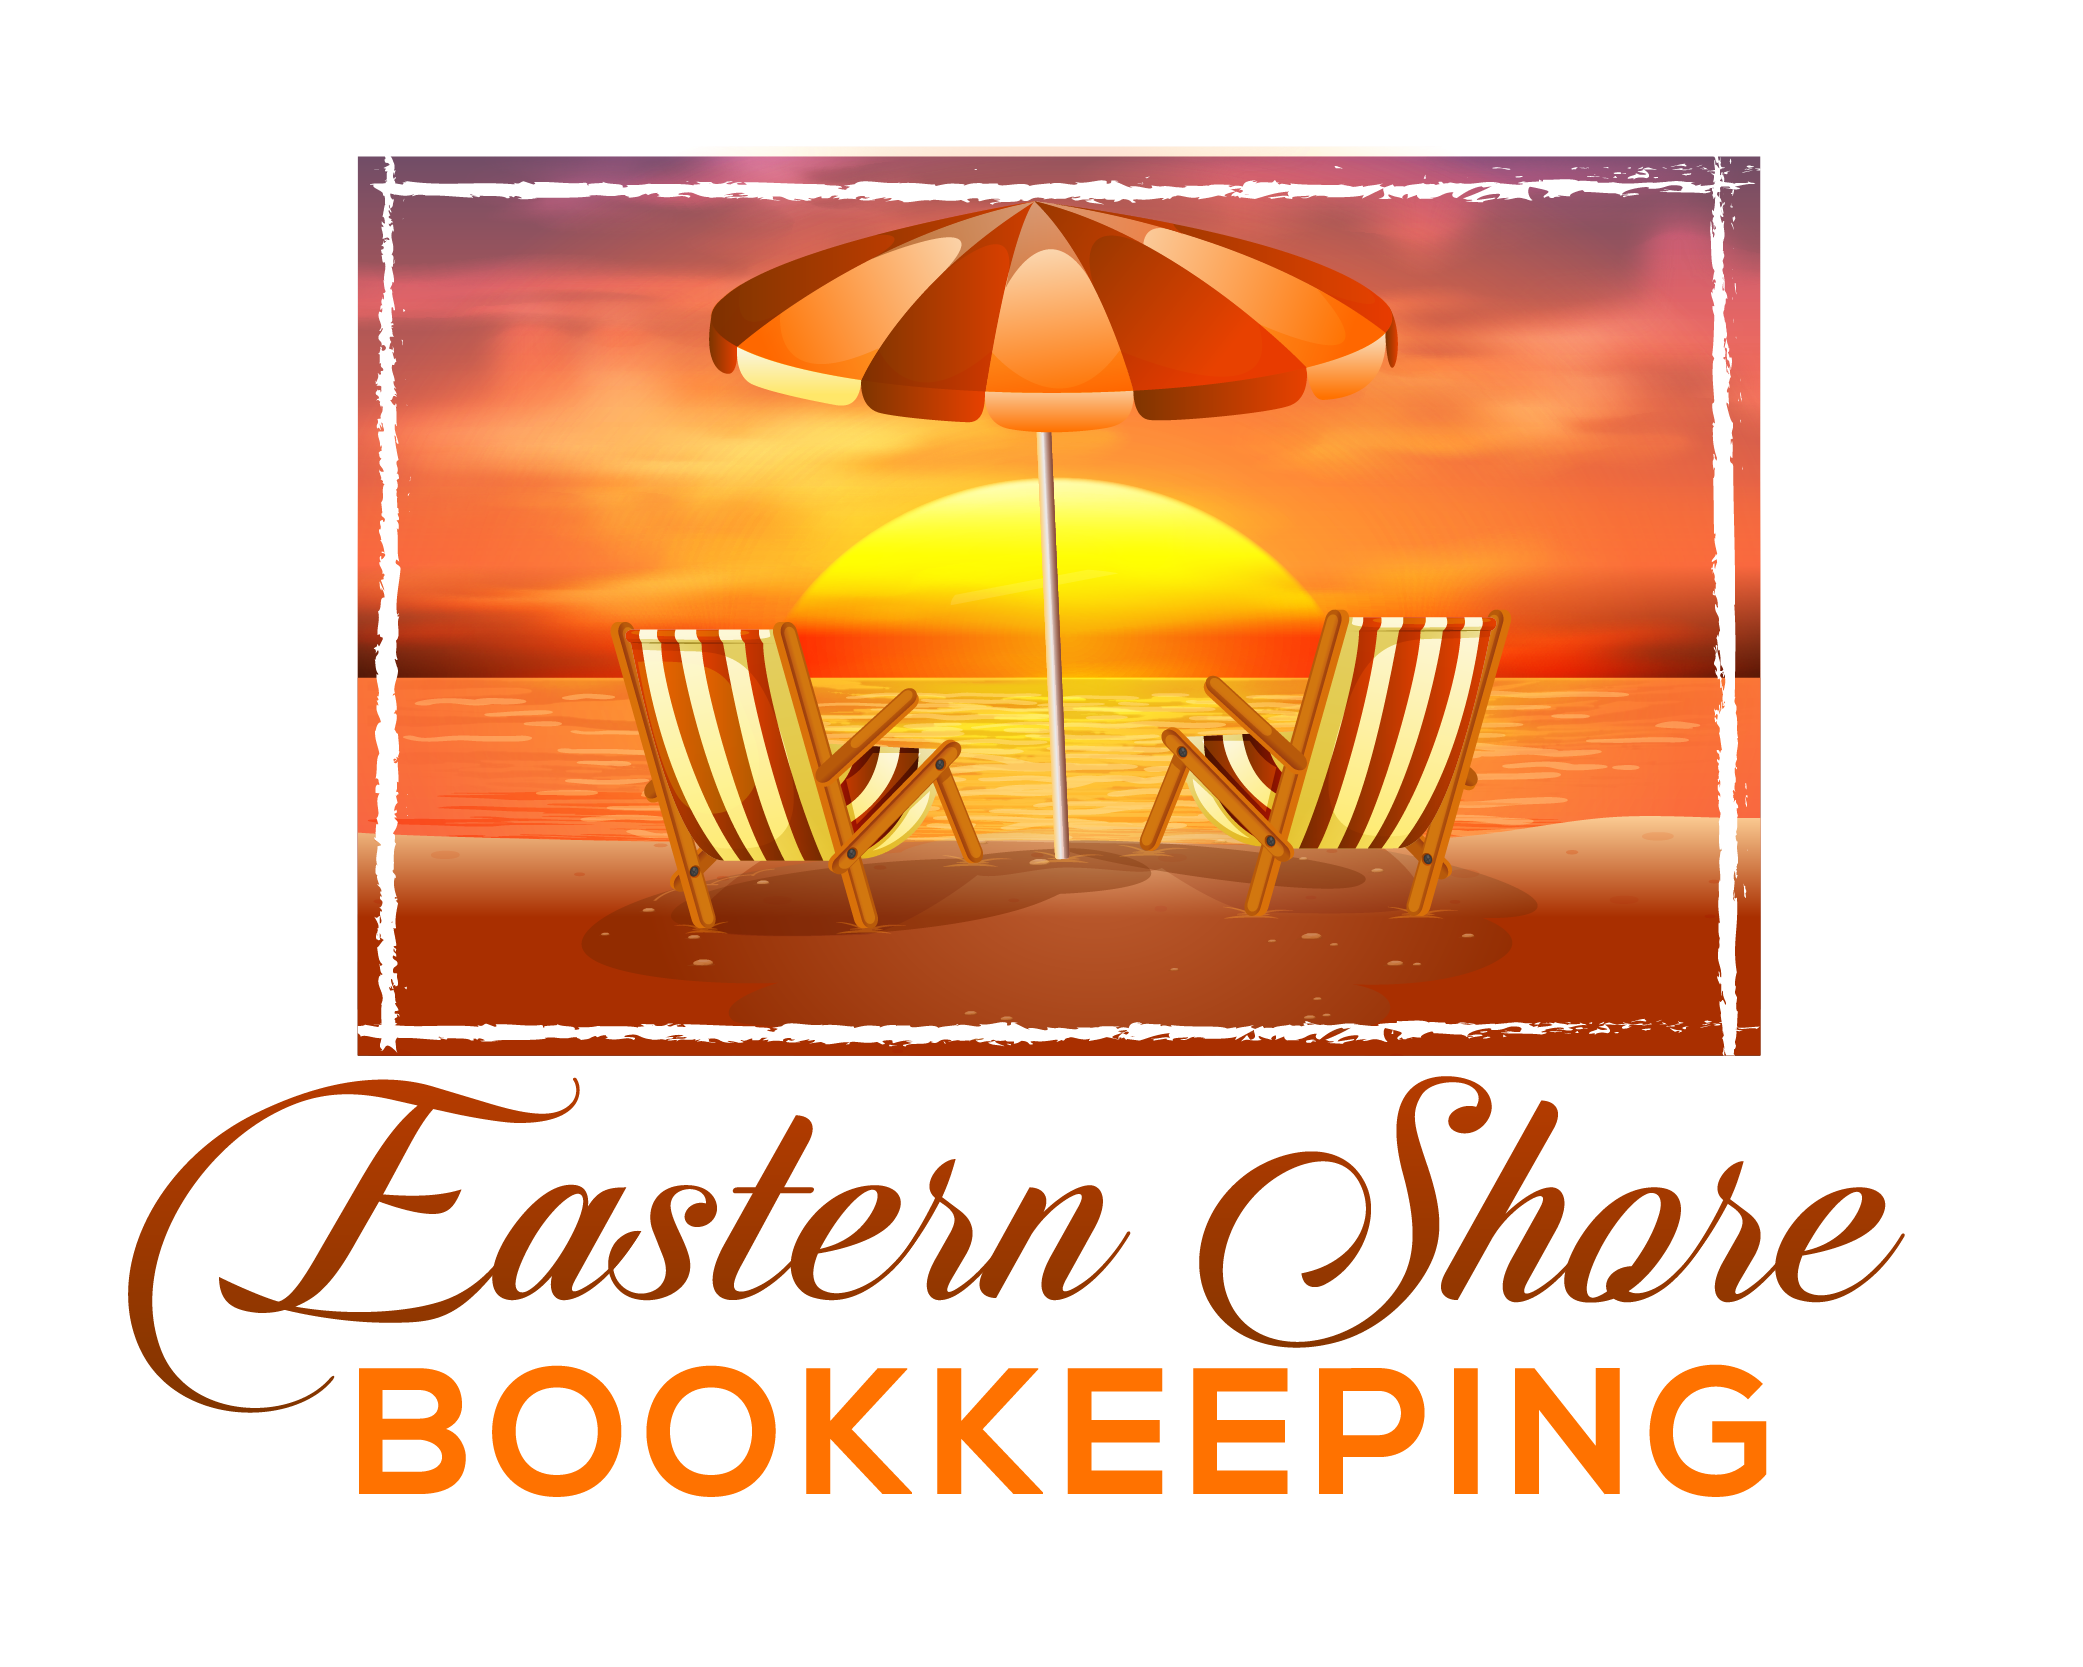 Eastern Shore Bookkeeping